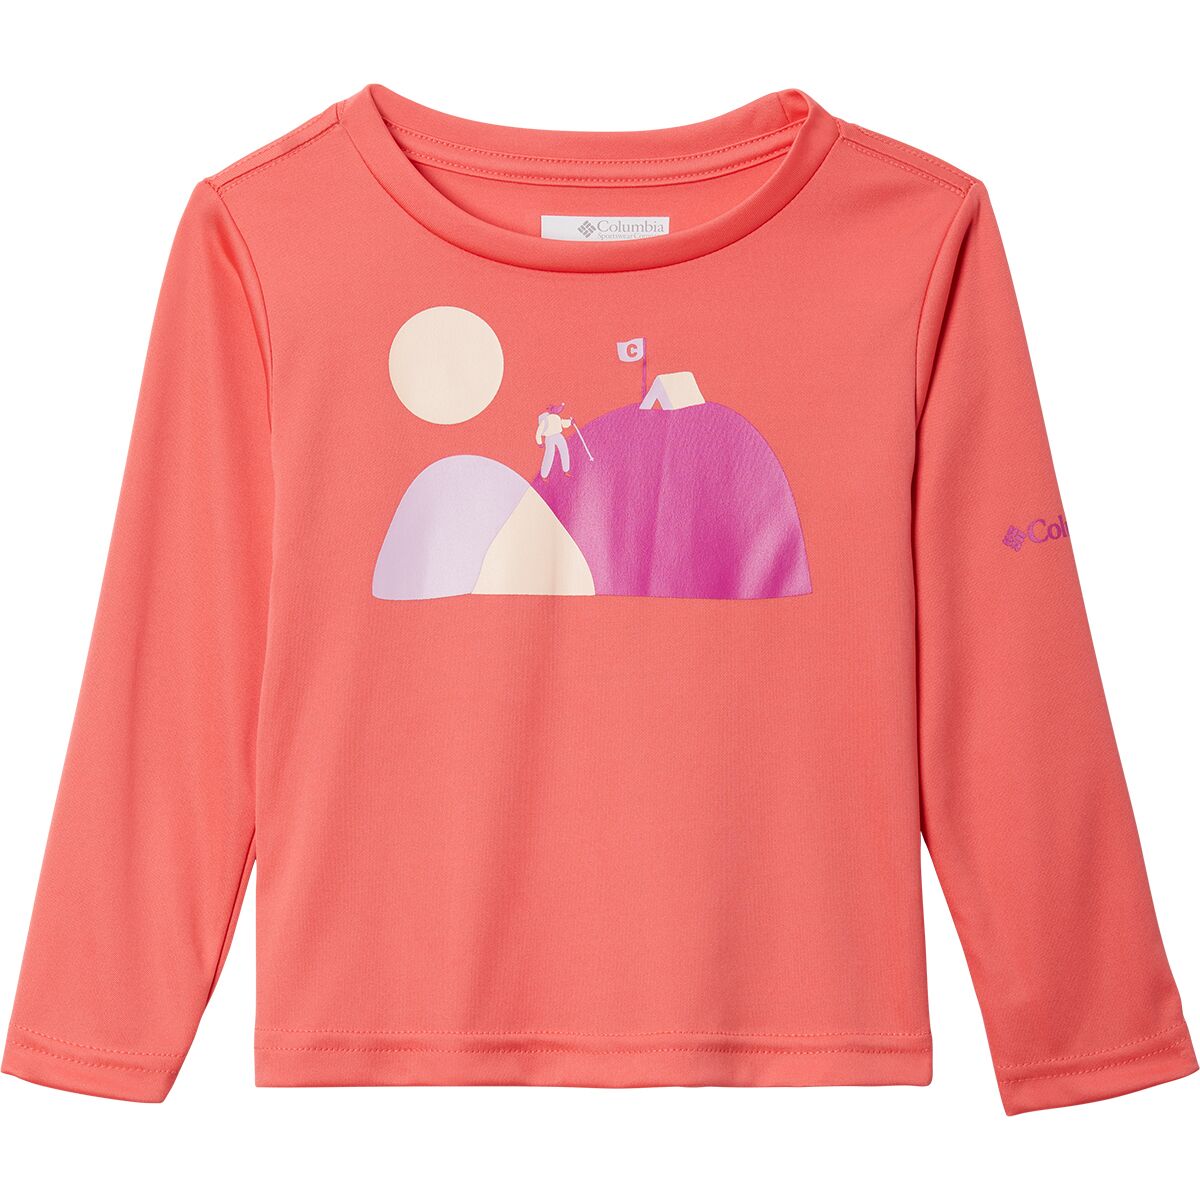 Columbia Mirror Rock Long-Sleeve Graphic T-Shirt - Toddler Girls'